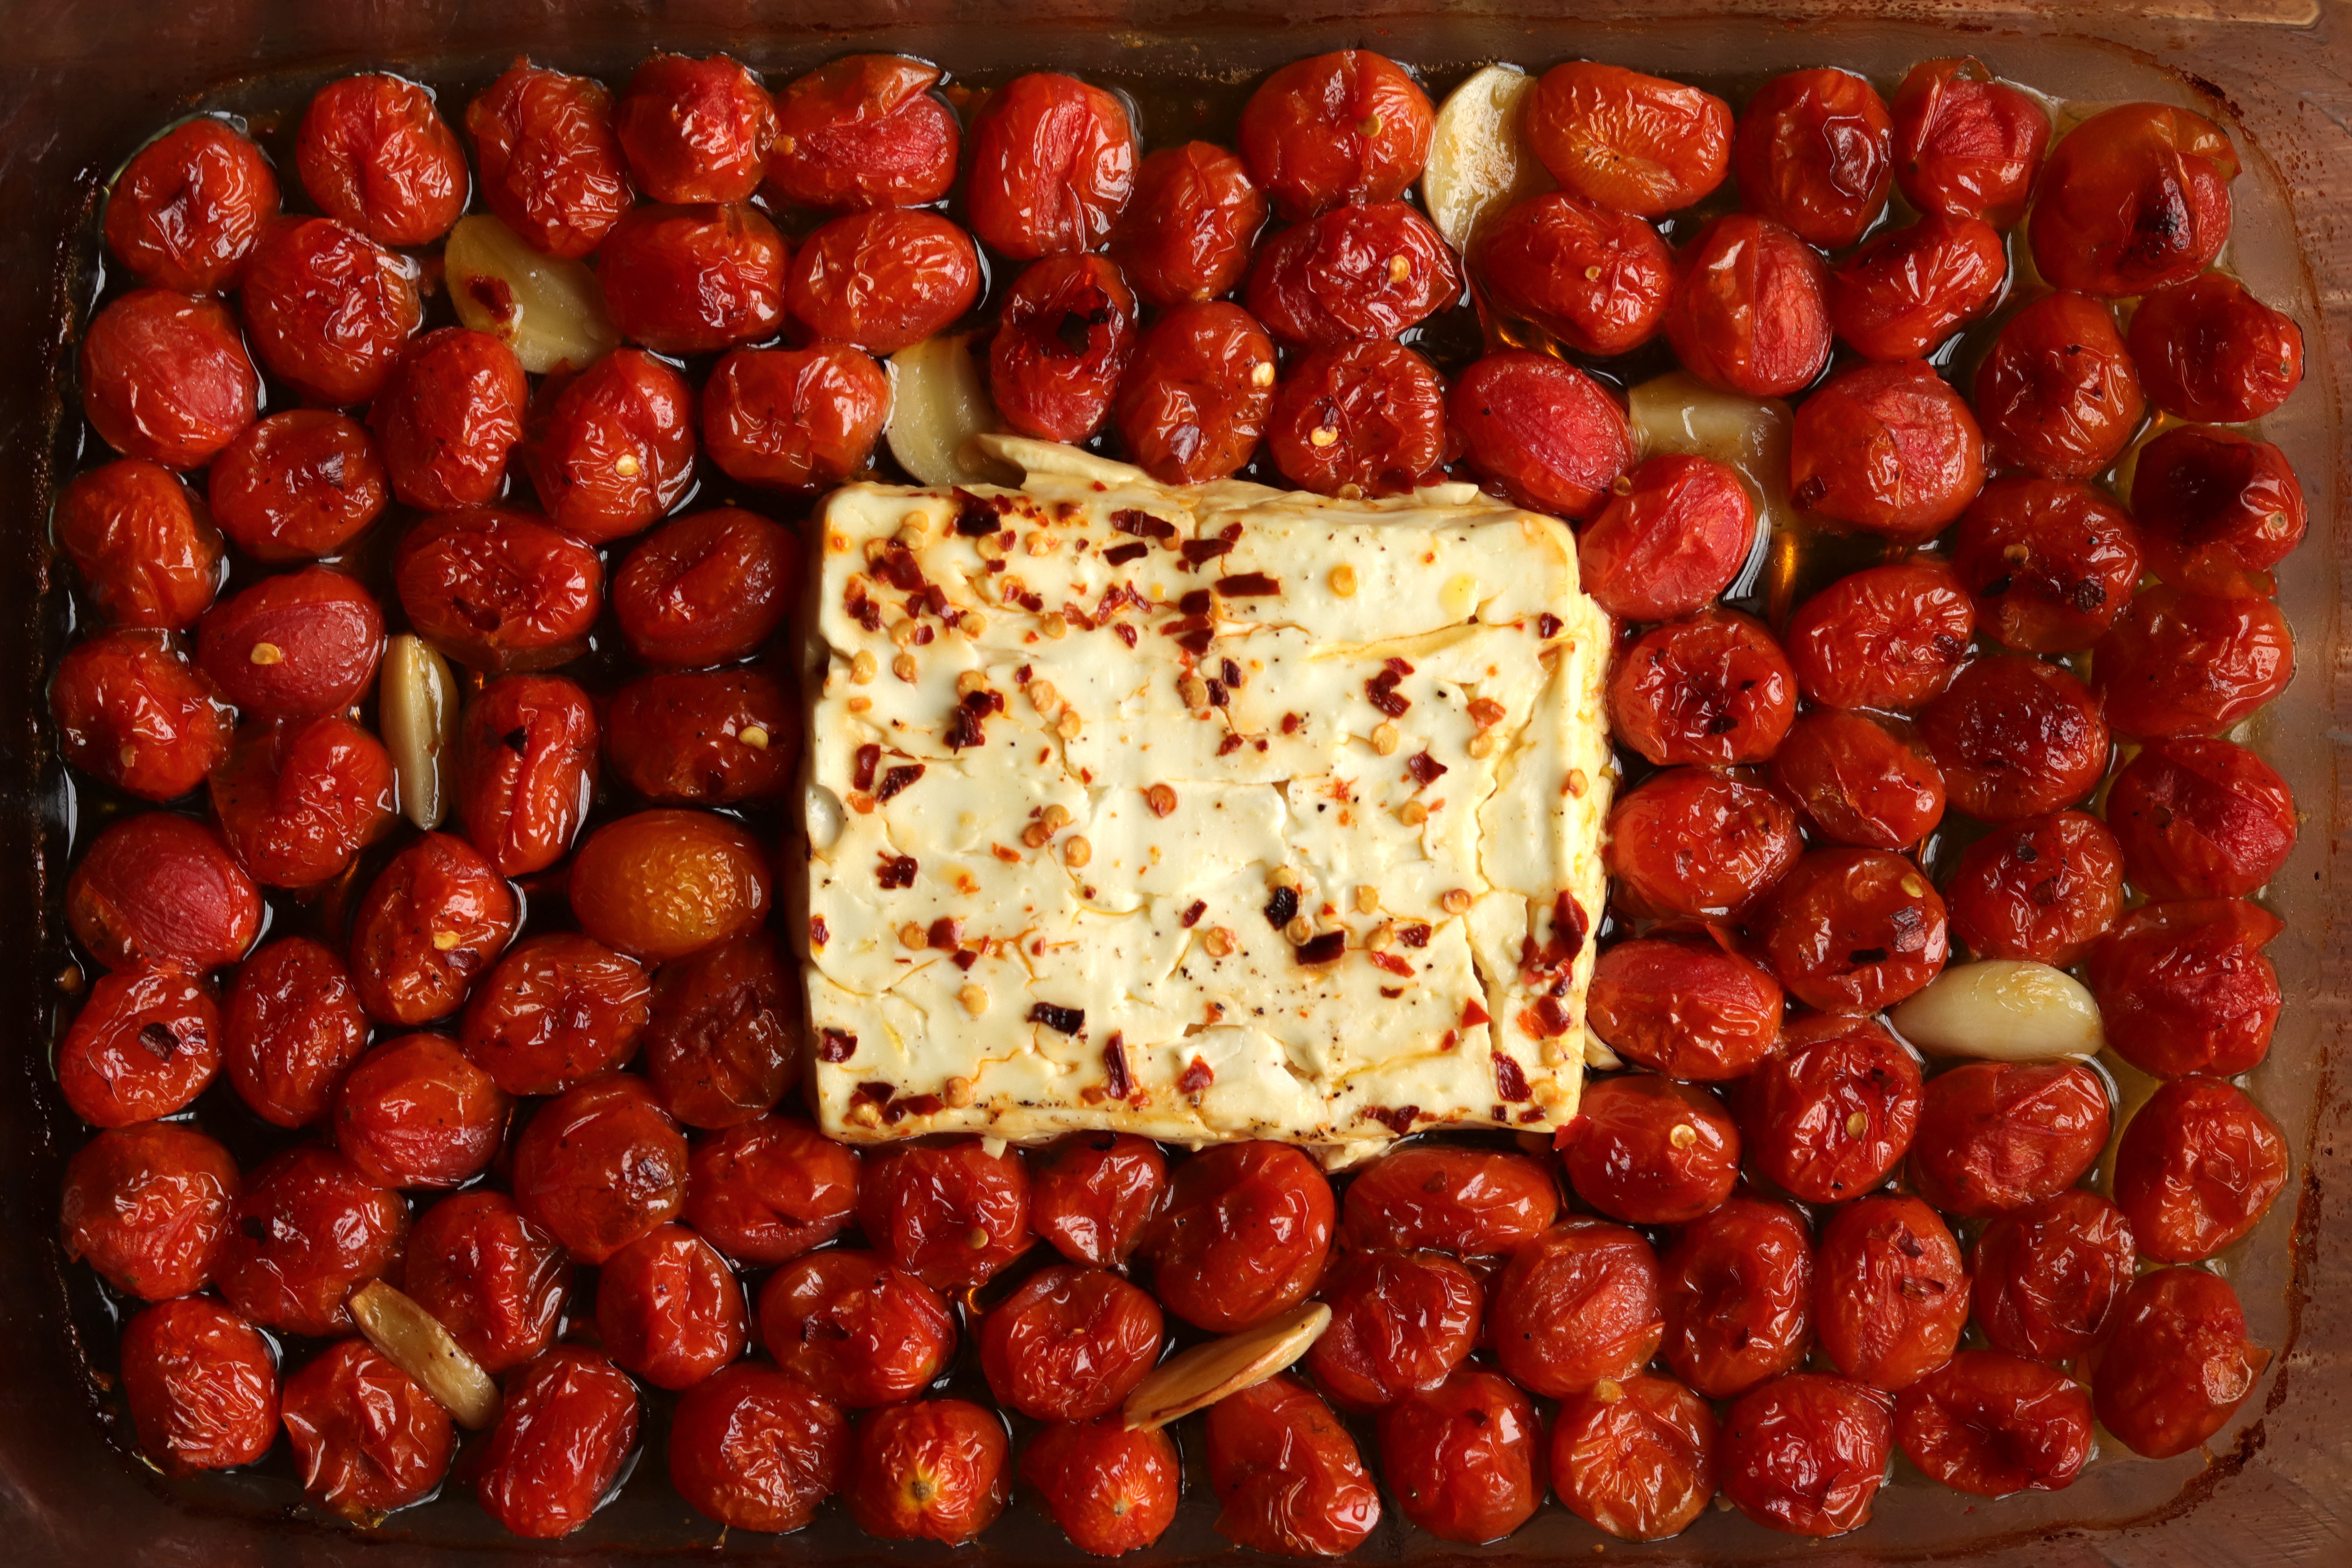 TikTok Viral Food Recipes Like 'Feta Pasta' Available in Virtual